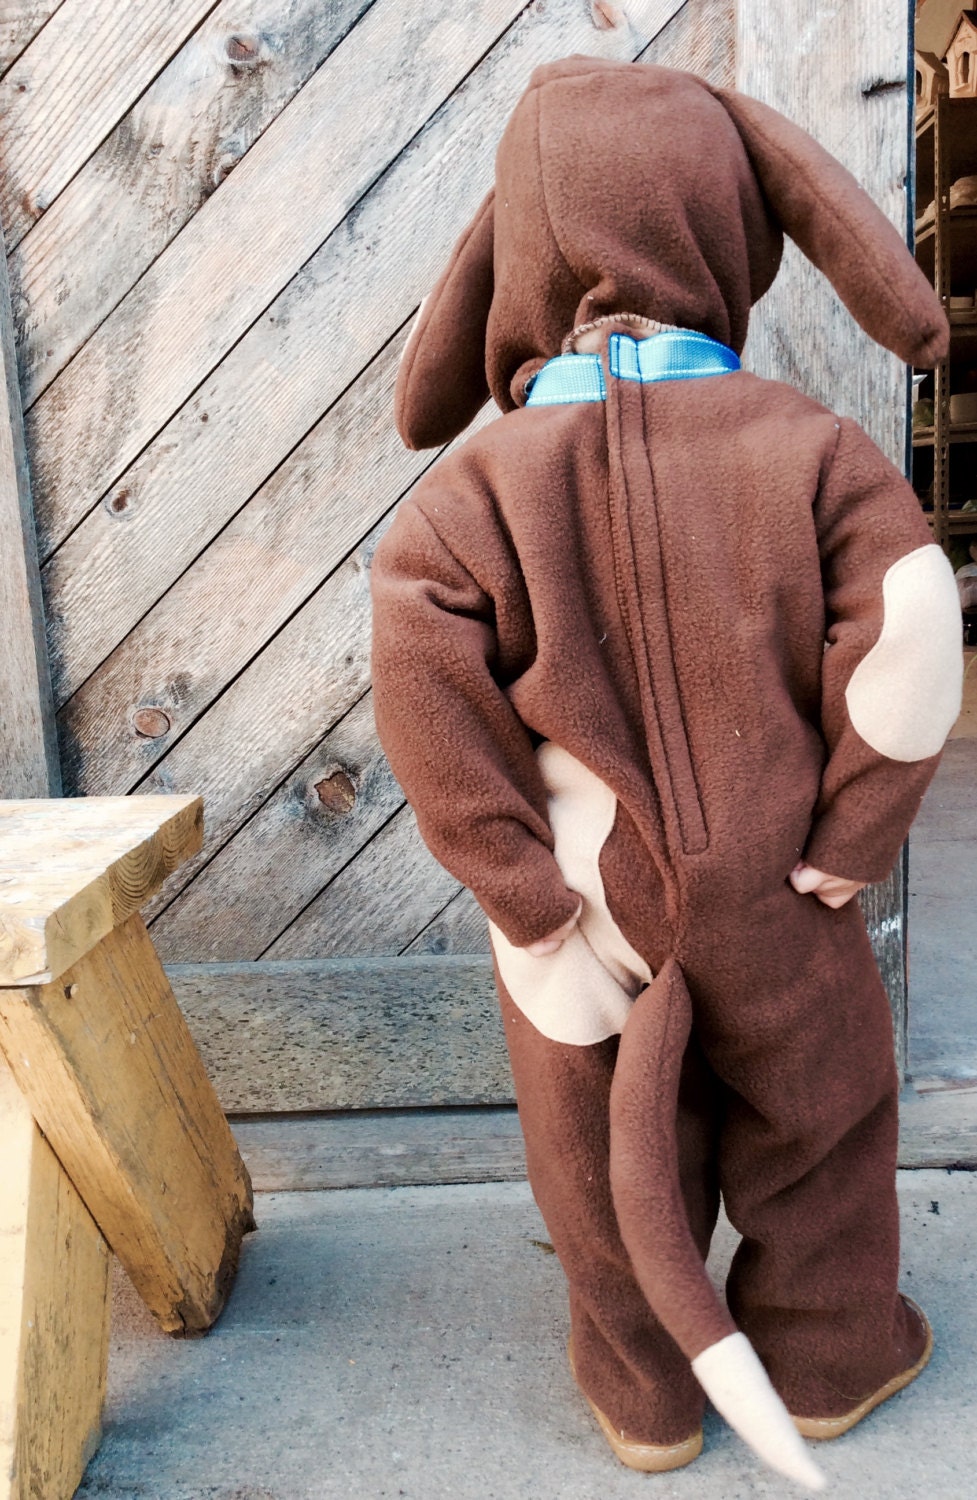 Details about   Boo Babies Halloween Costume Precious Puppy Dog Sz 9-18 Months 4 Pieces Beige